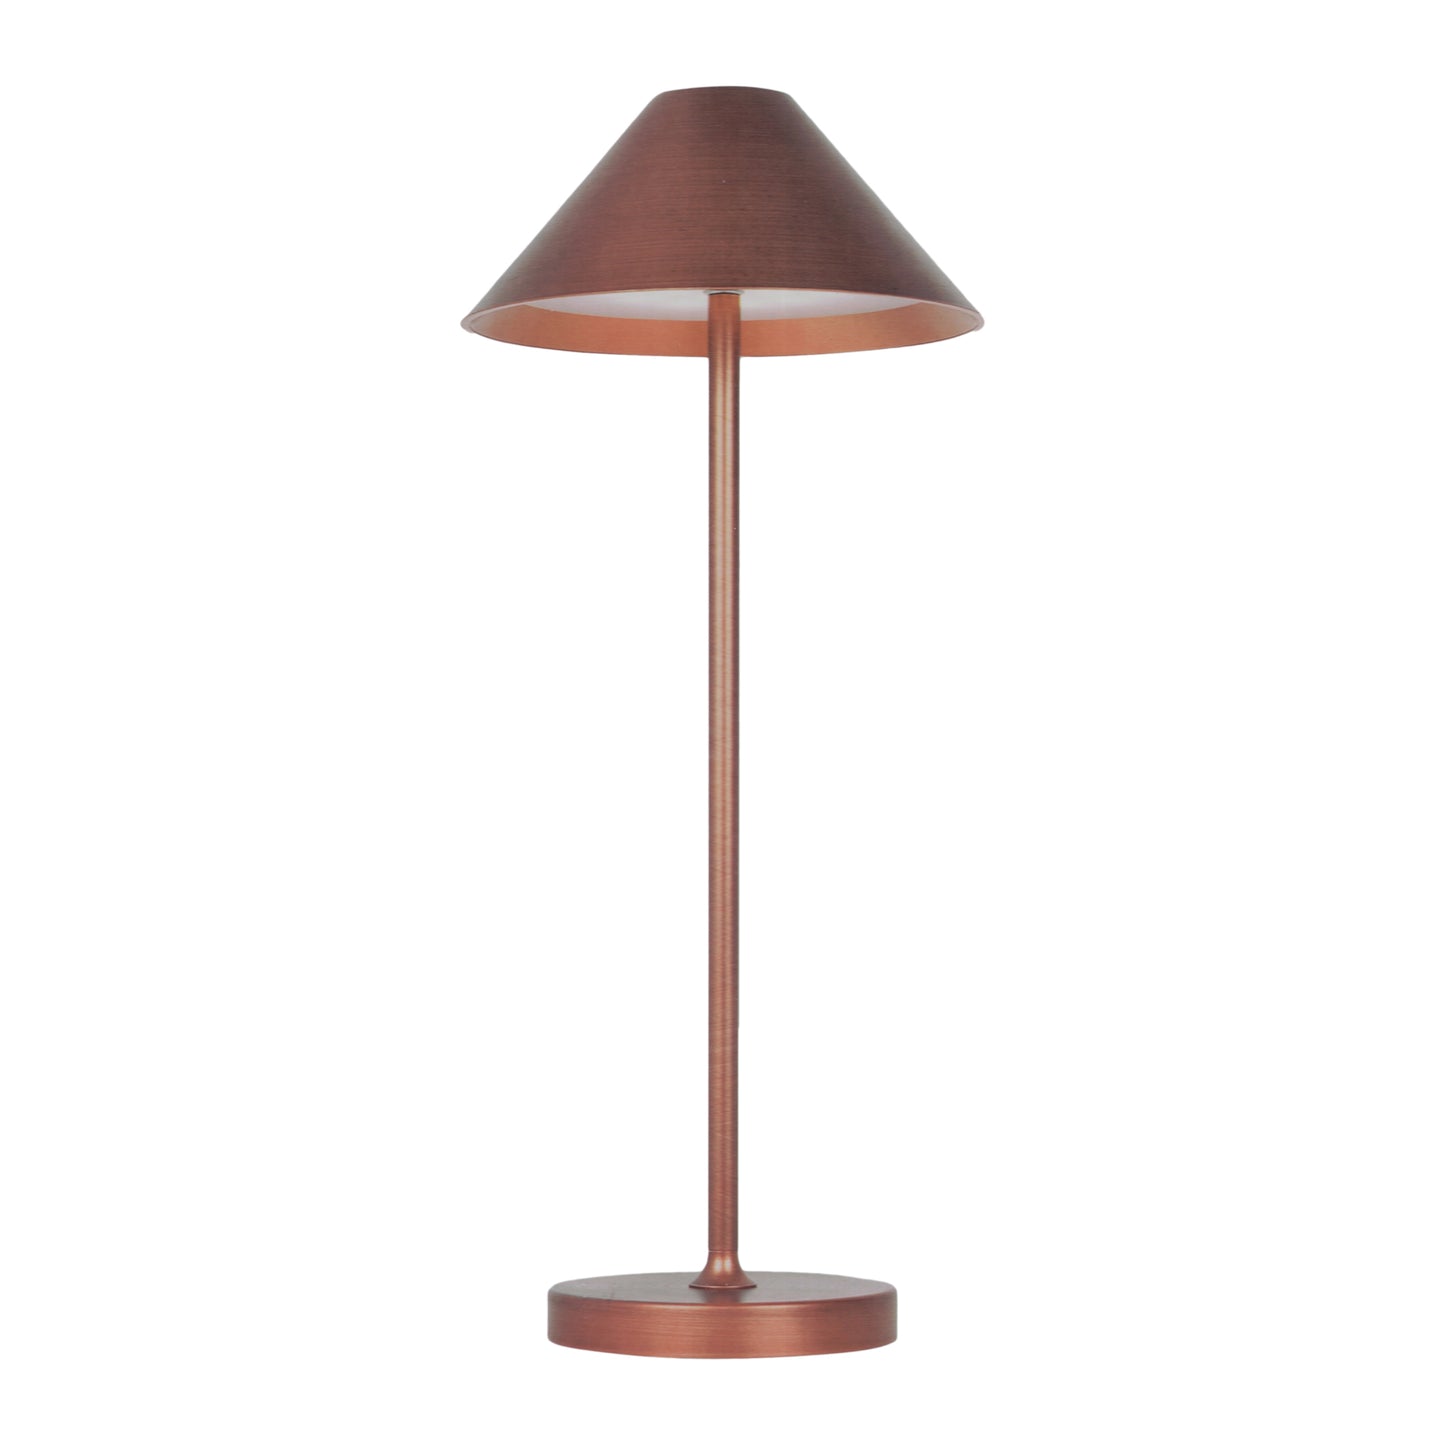 Kelù Lampada LED da tavolo senza fili, lampada portatile per esterni, a batteria usb ricaricabile, H35 cm rame